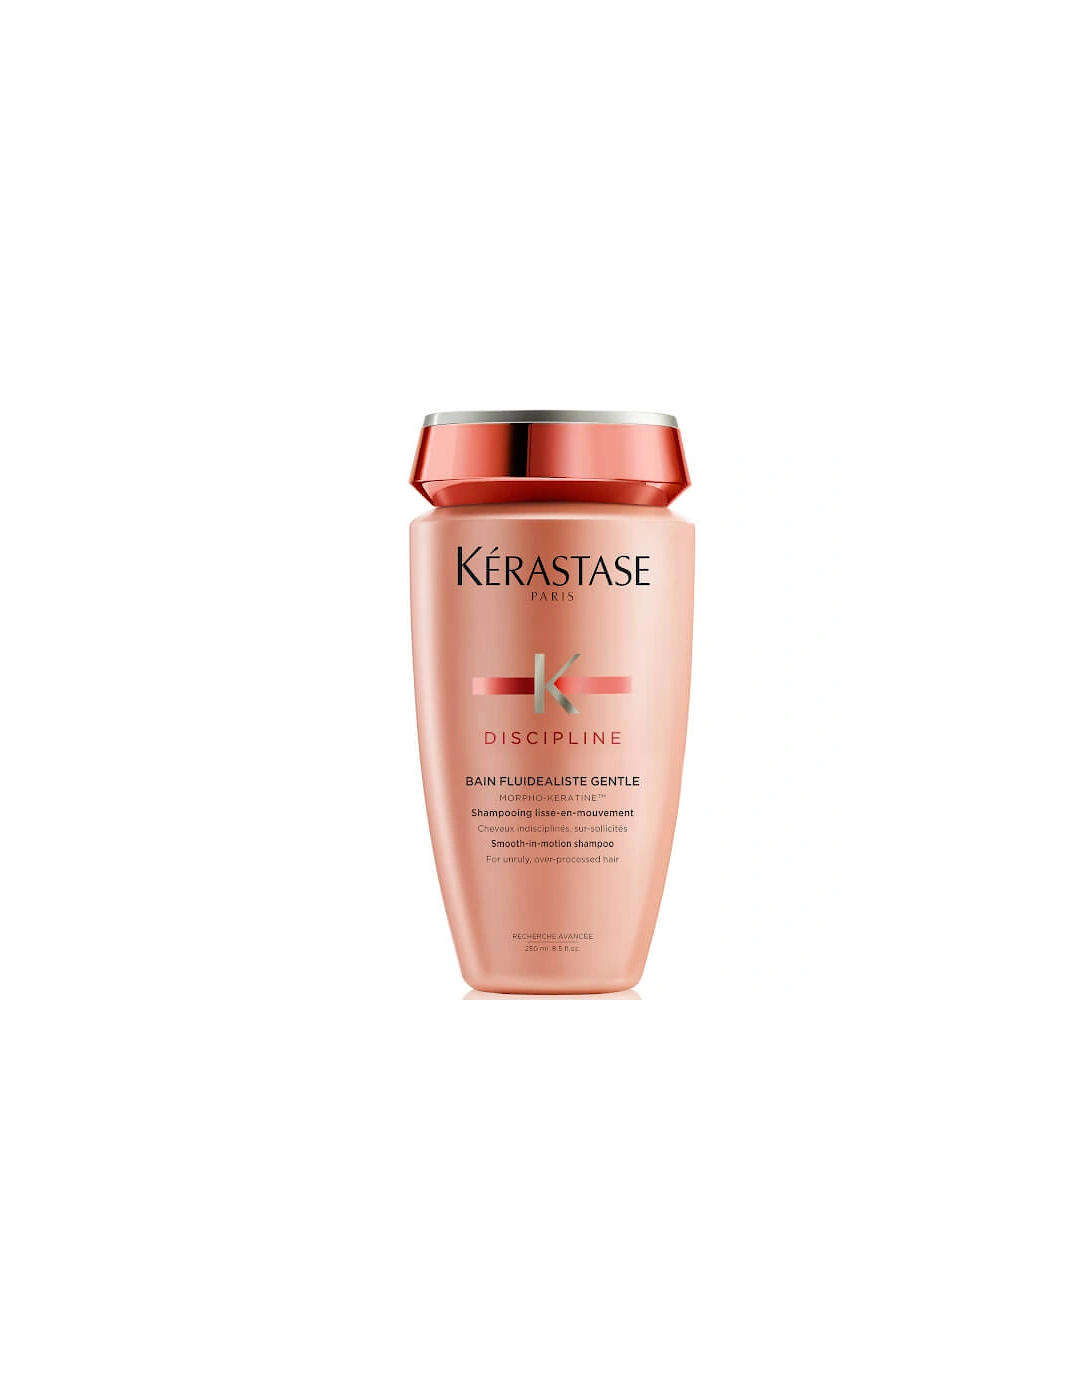 Kérastase Discipline Bain Fluidealiste Shampoo for Cleansing Impurities and Protection Against Hair Frizz 250ml - Kerastase, 2 of 1